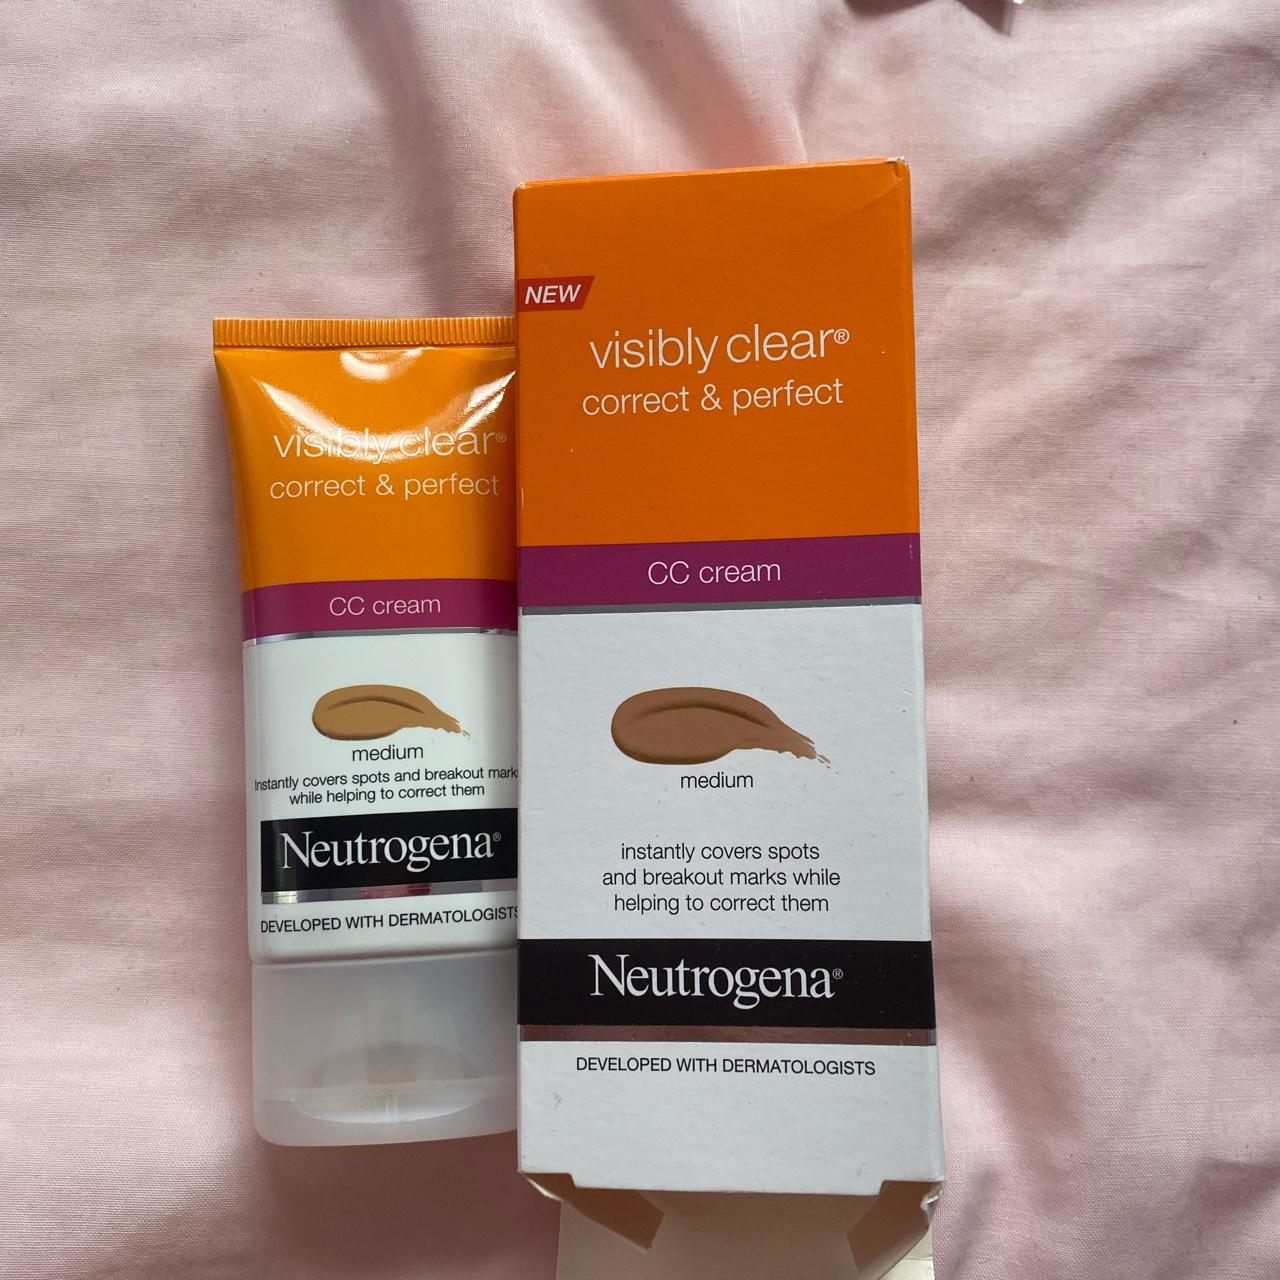 Product Image 1 - Brand-new Neutrogena CC cream hasn’t